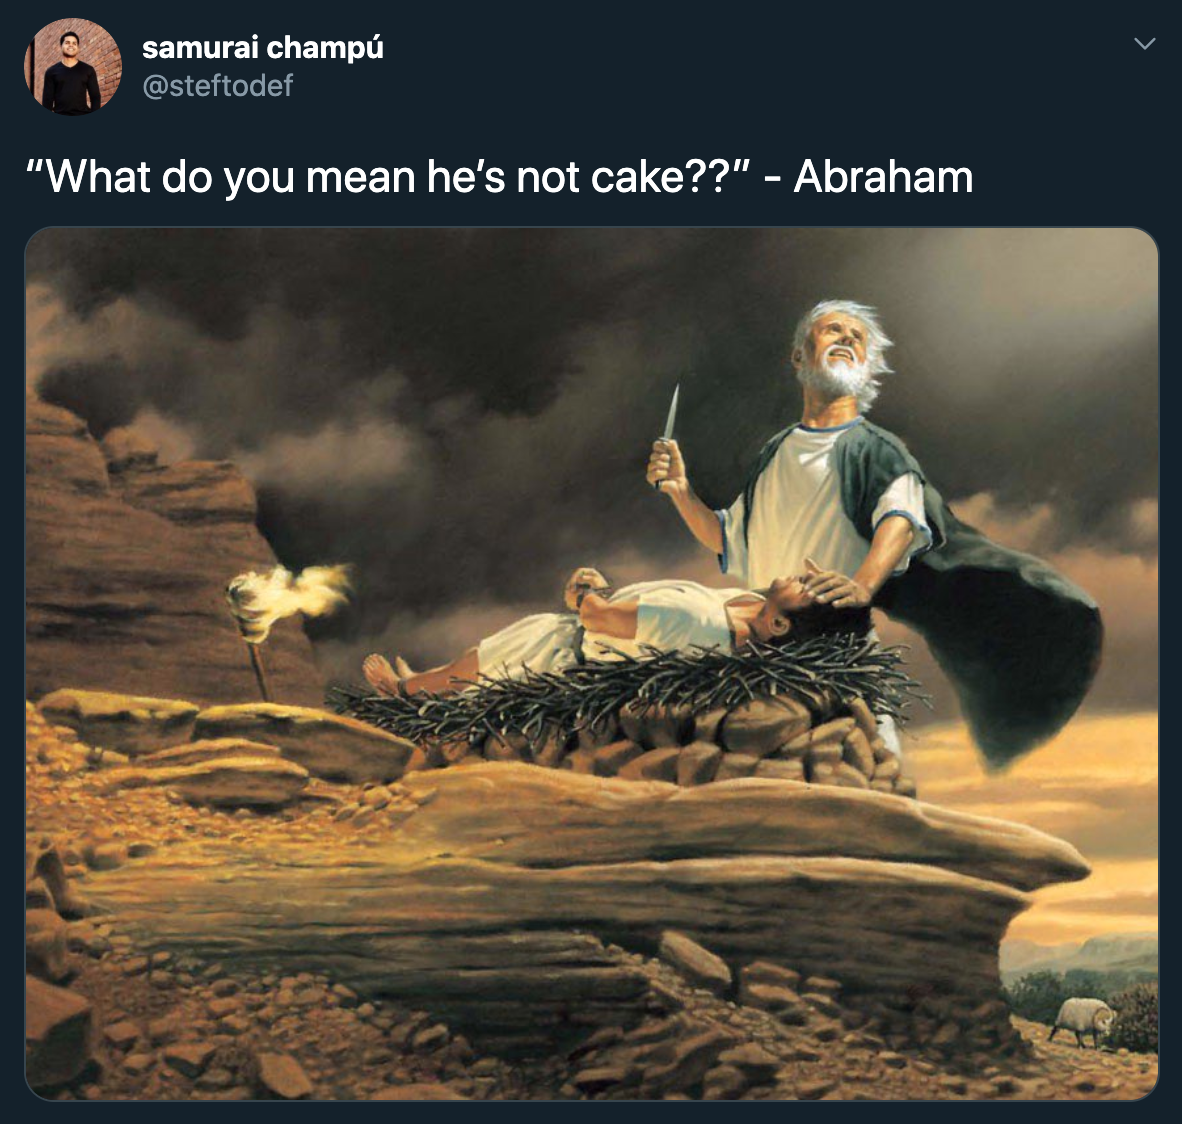 schizophrenia and religion - samurai champ "What do you mean he's not cake??" Abraham